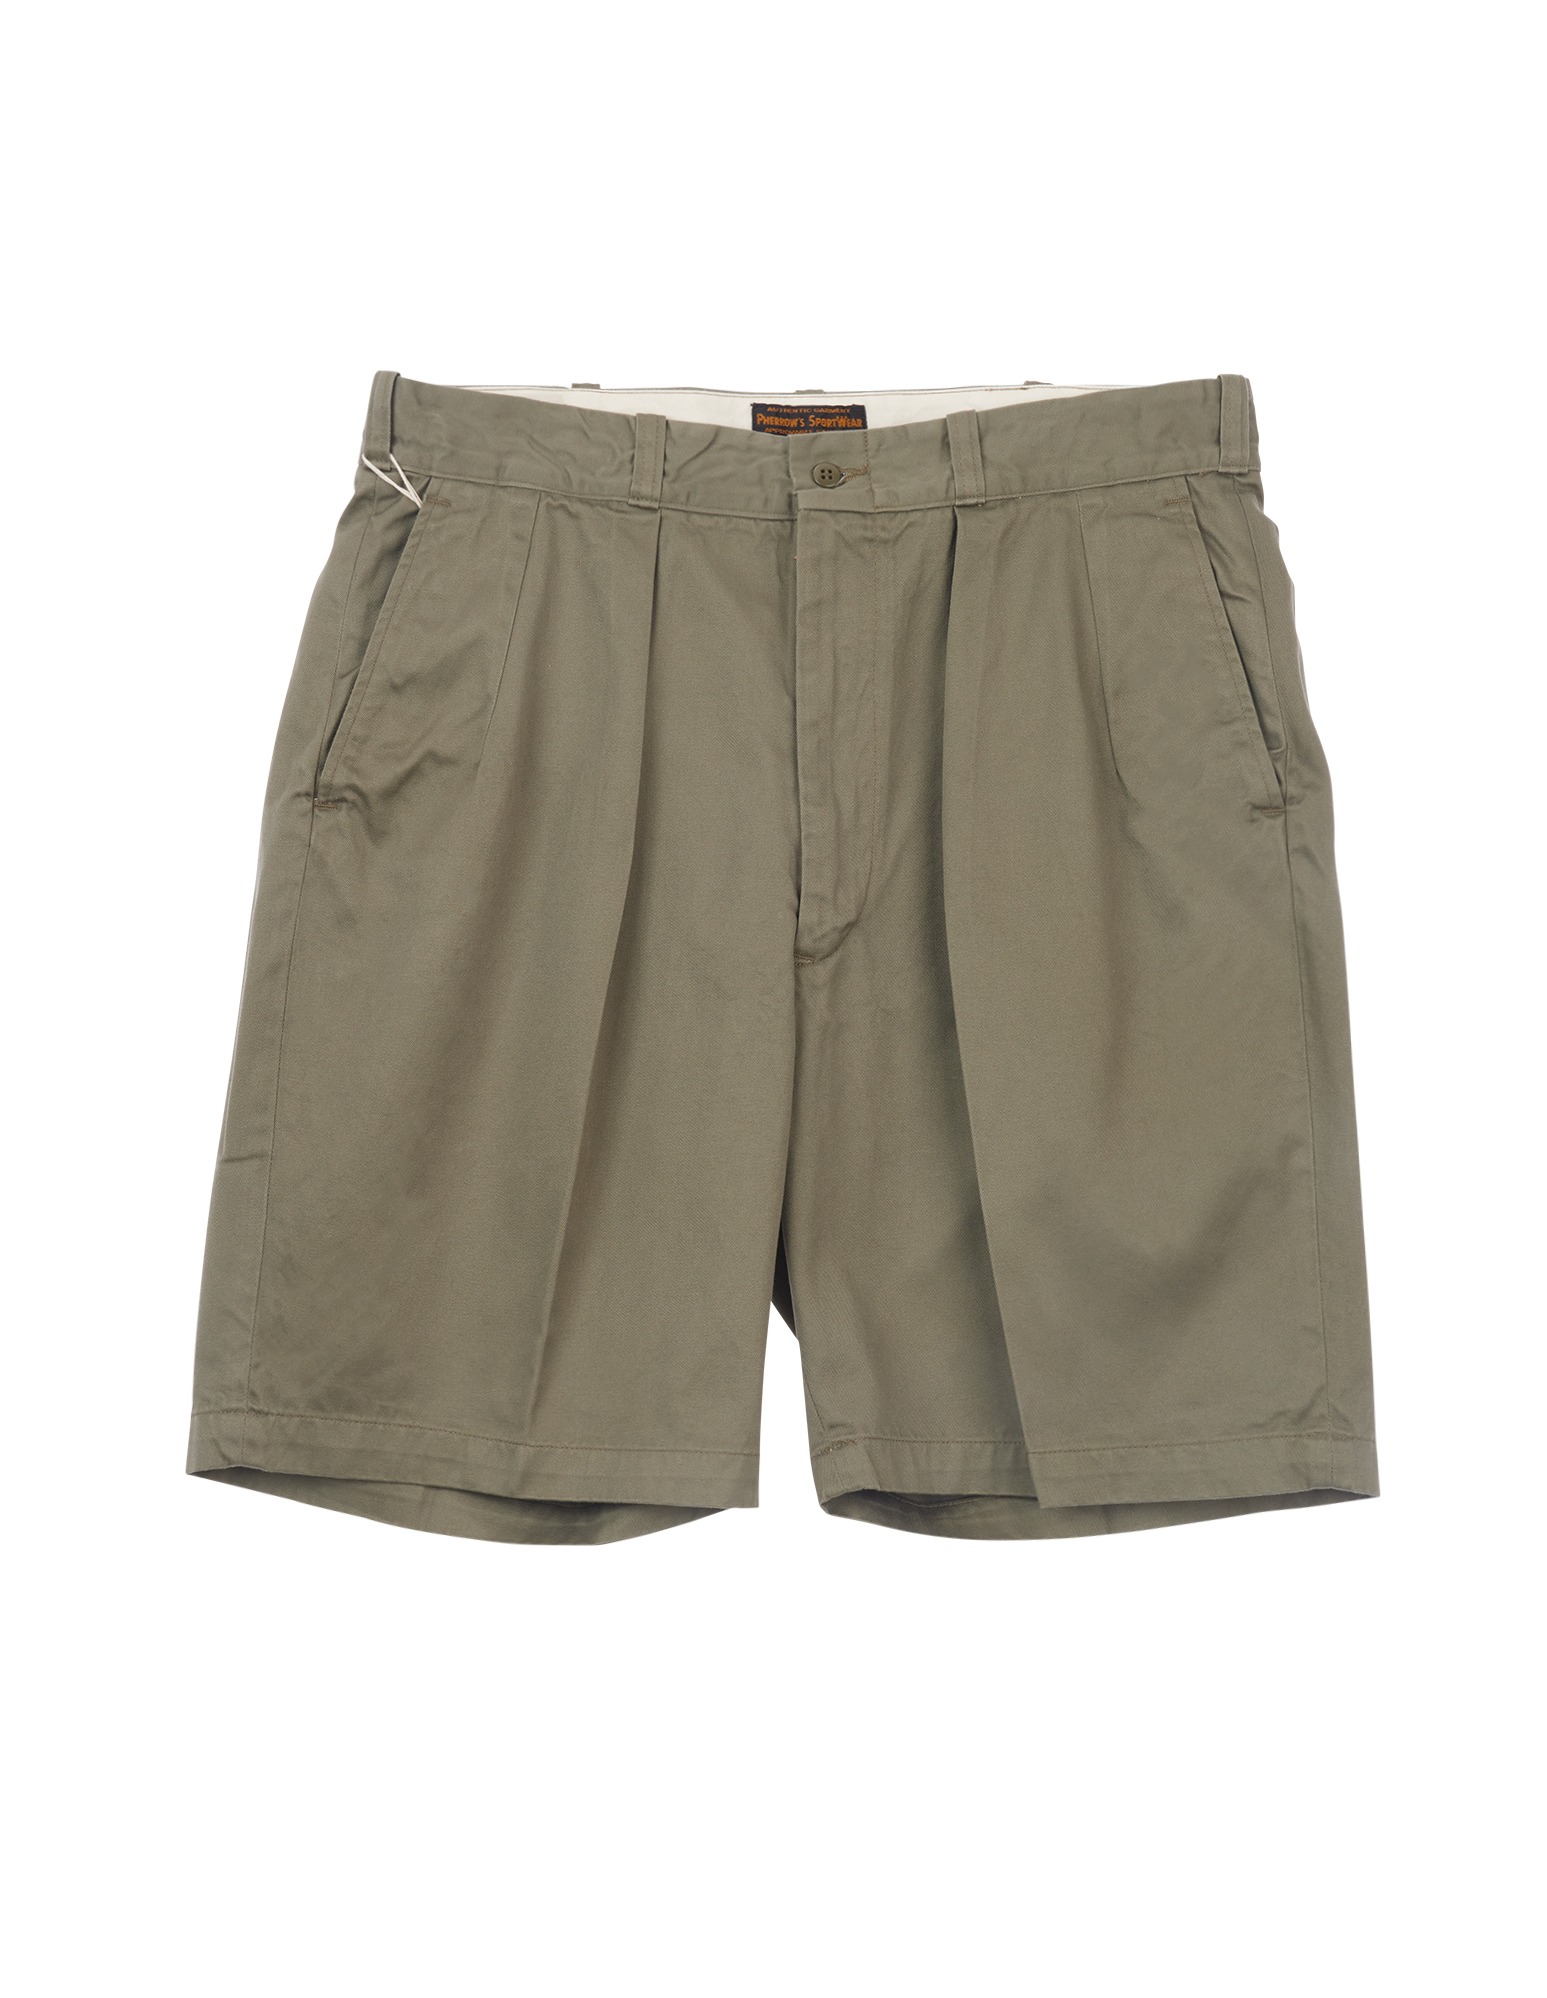 U.S Army Chino Shorts (Olive)